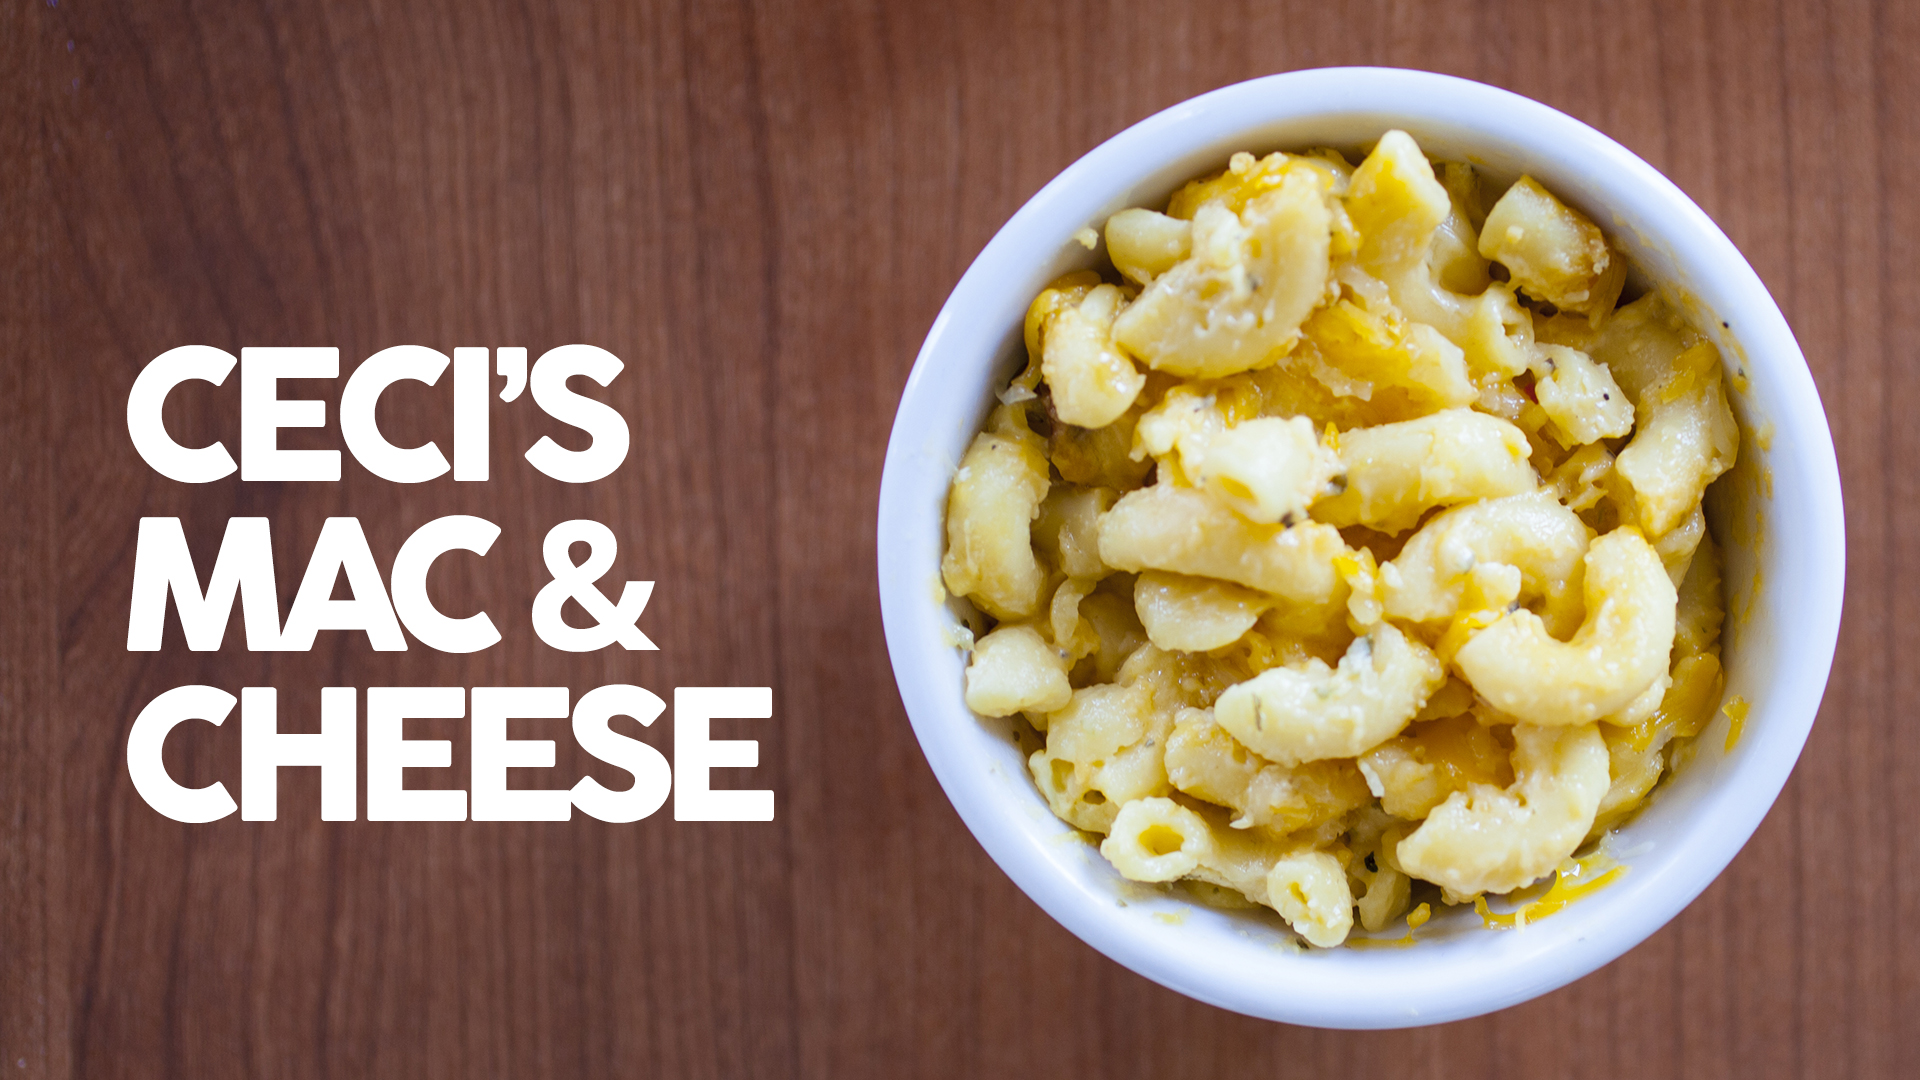 Cheesy Ceci’s Mac & Cheese